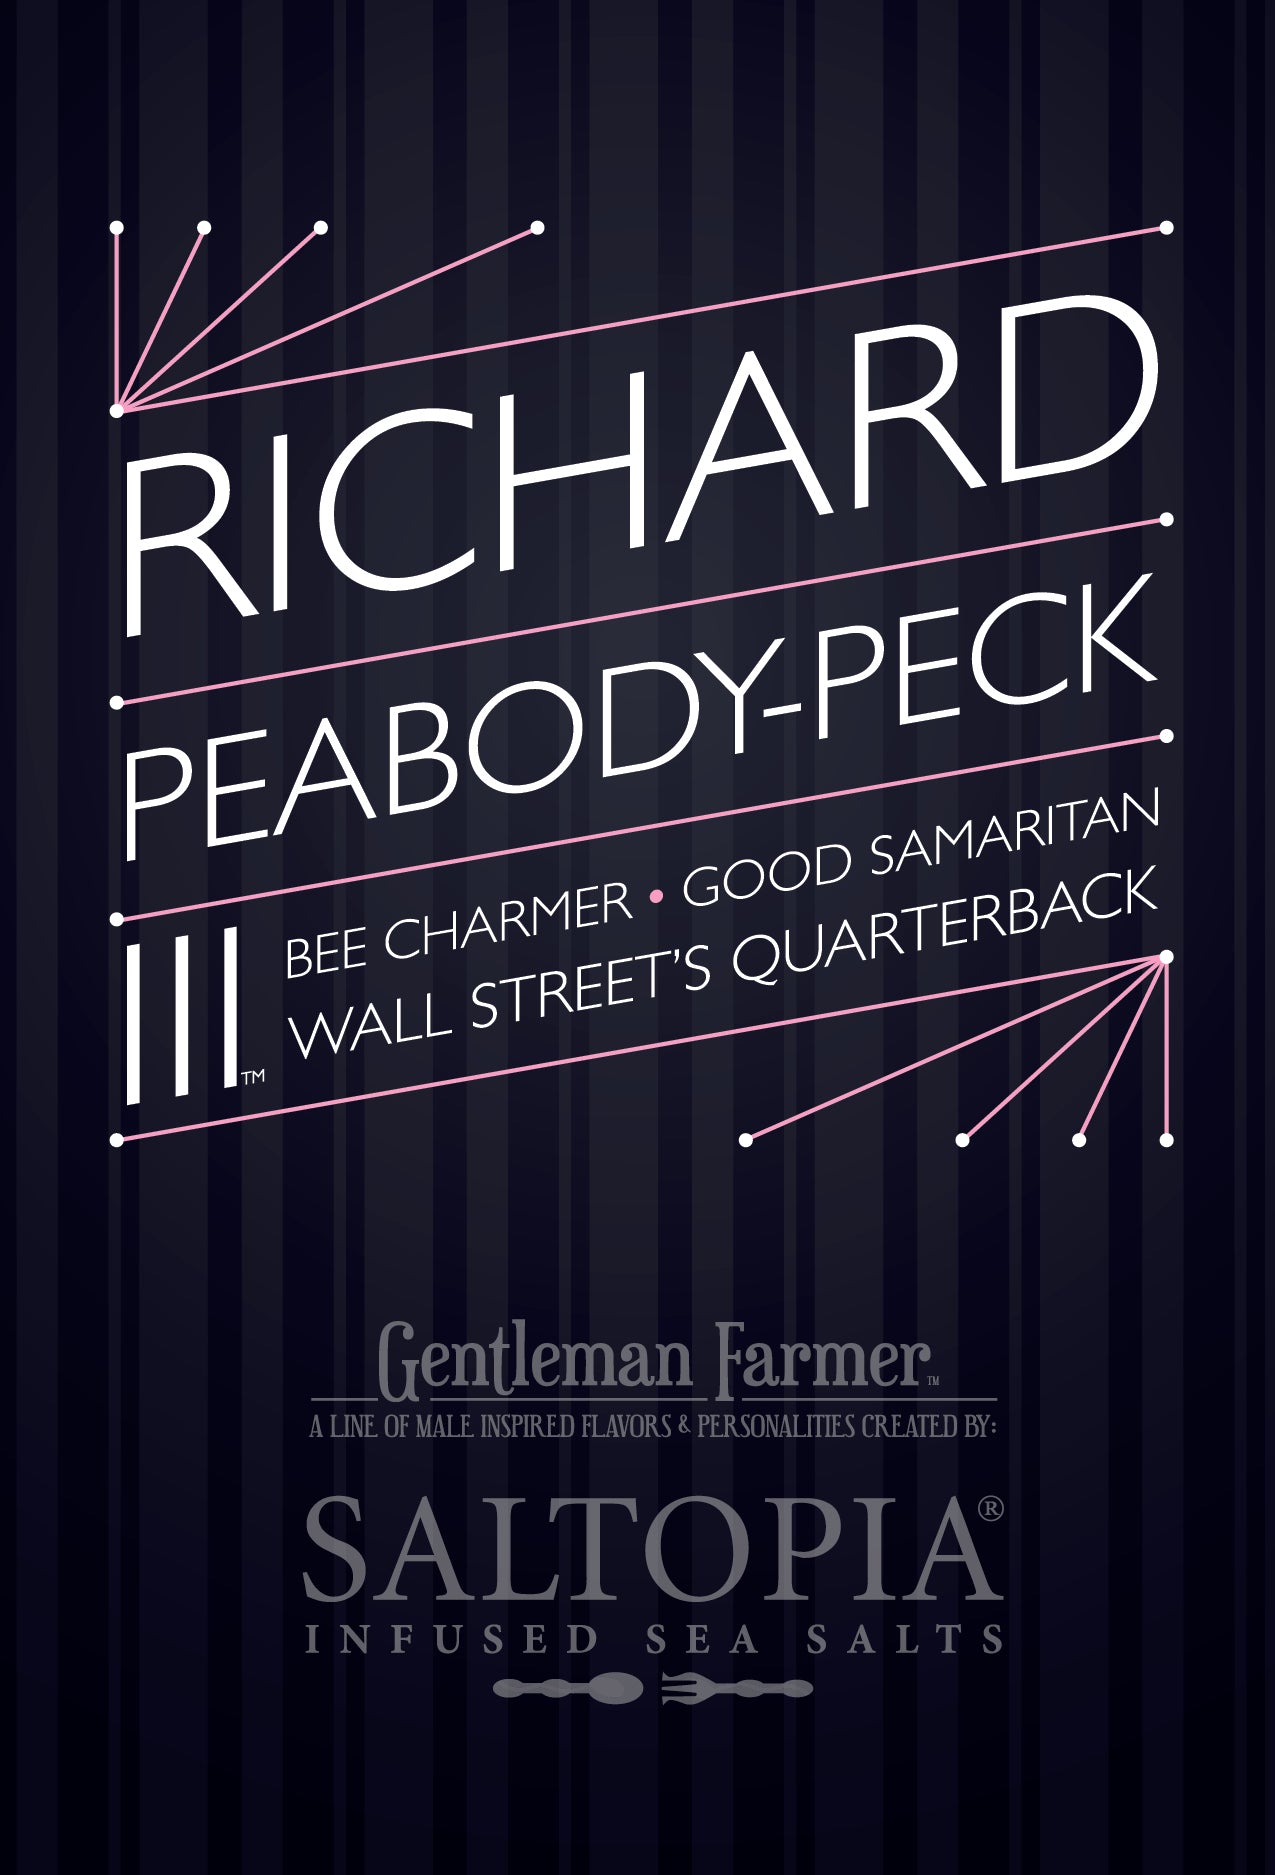 Richard Peabody-Peck III tm